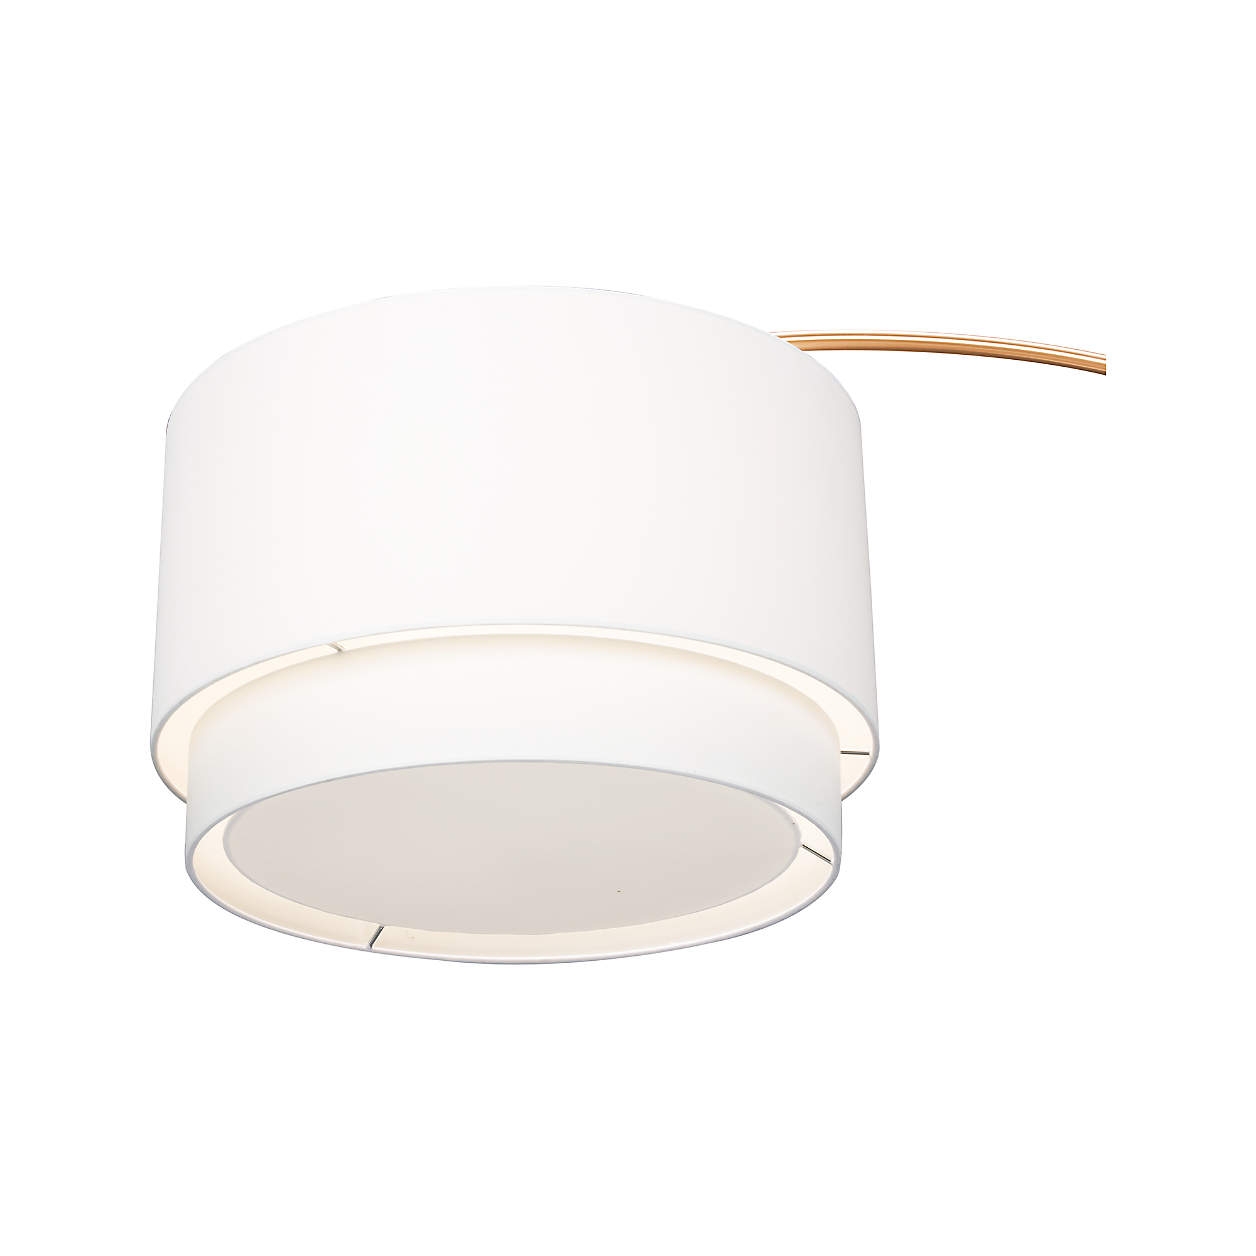 Meryl Arc Brass Floor Lamp with White Shade - Image 3